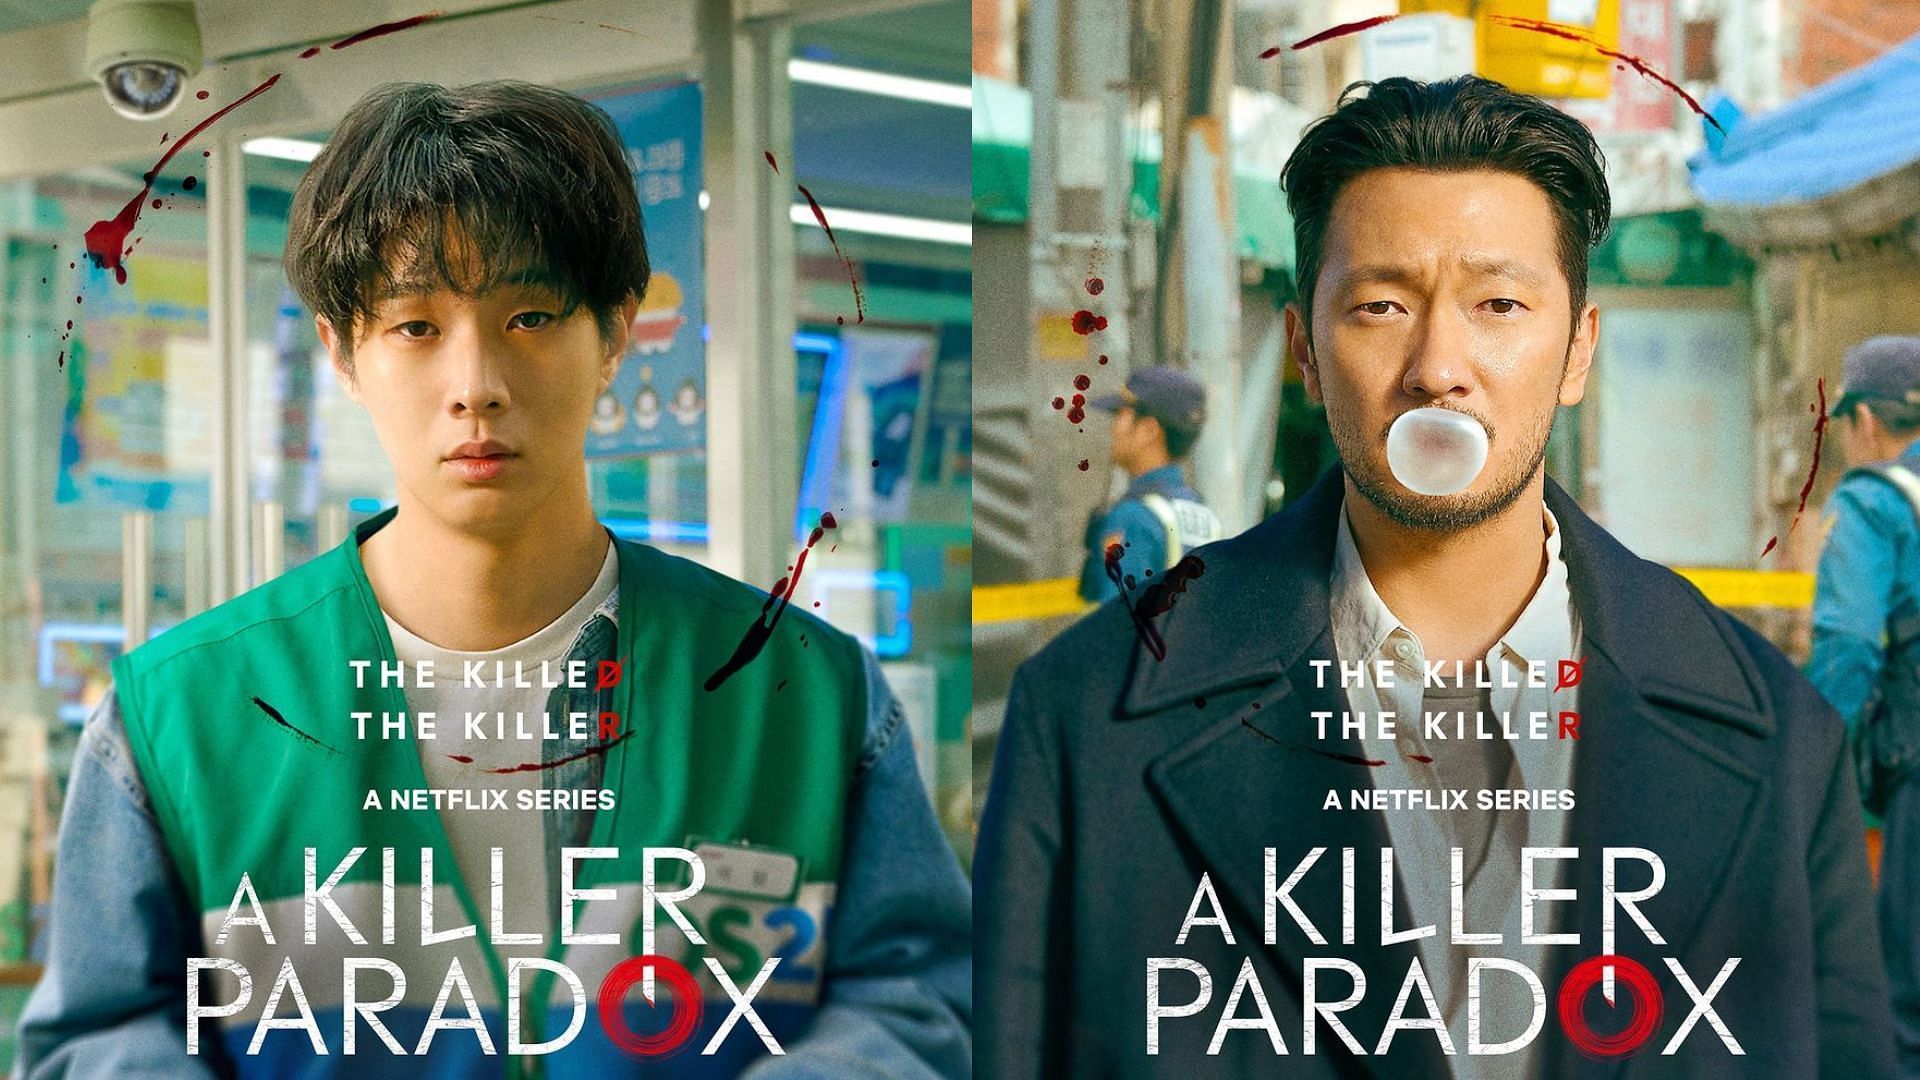 Choi Woo-shik and Son Suk-ku for A Killer Paradox (Images Via Instagram/@netflixkcontent)